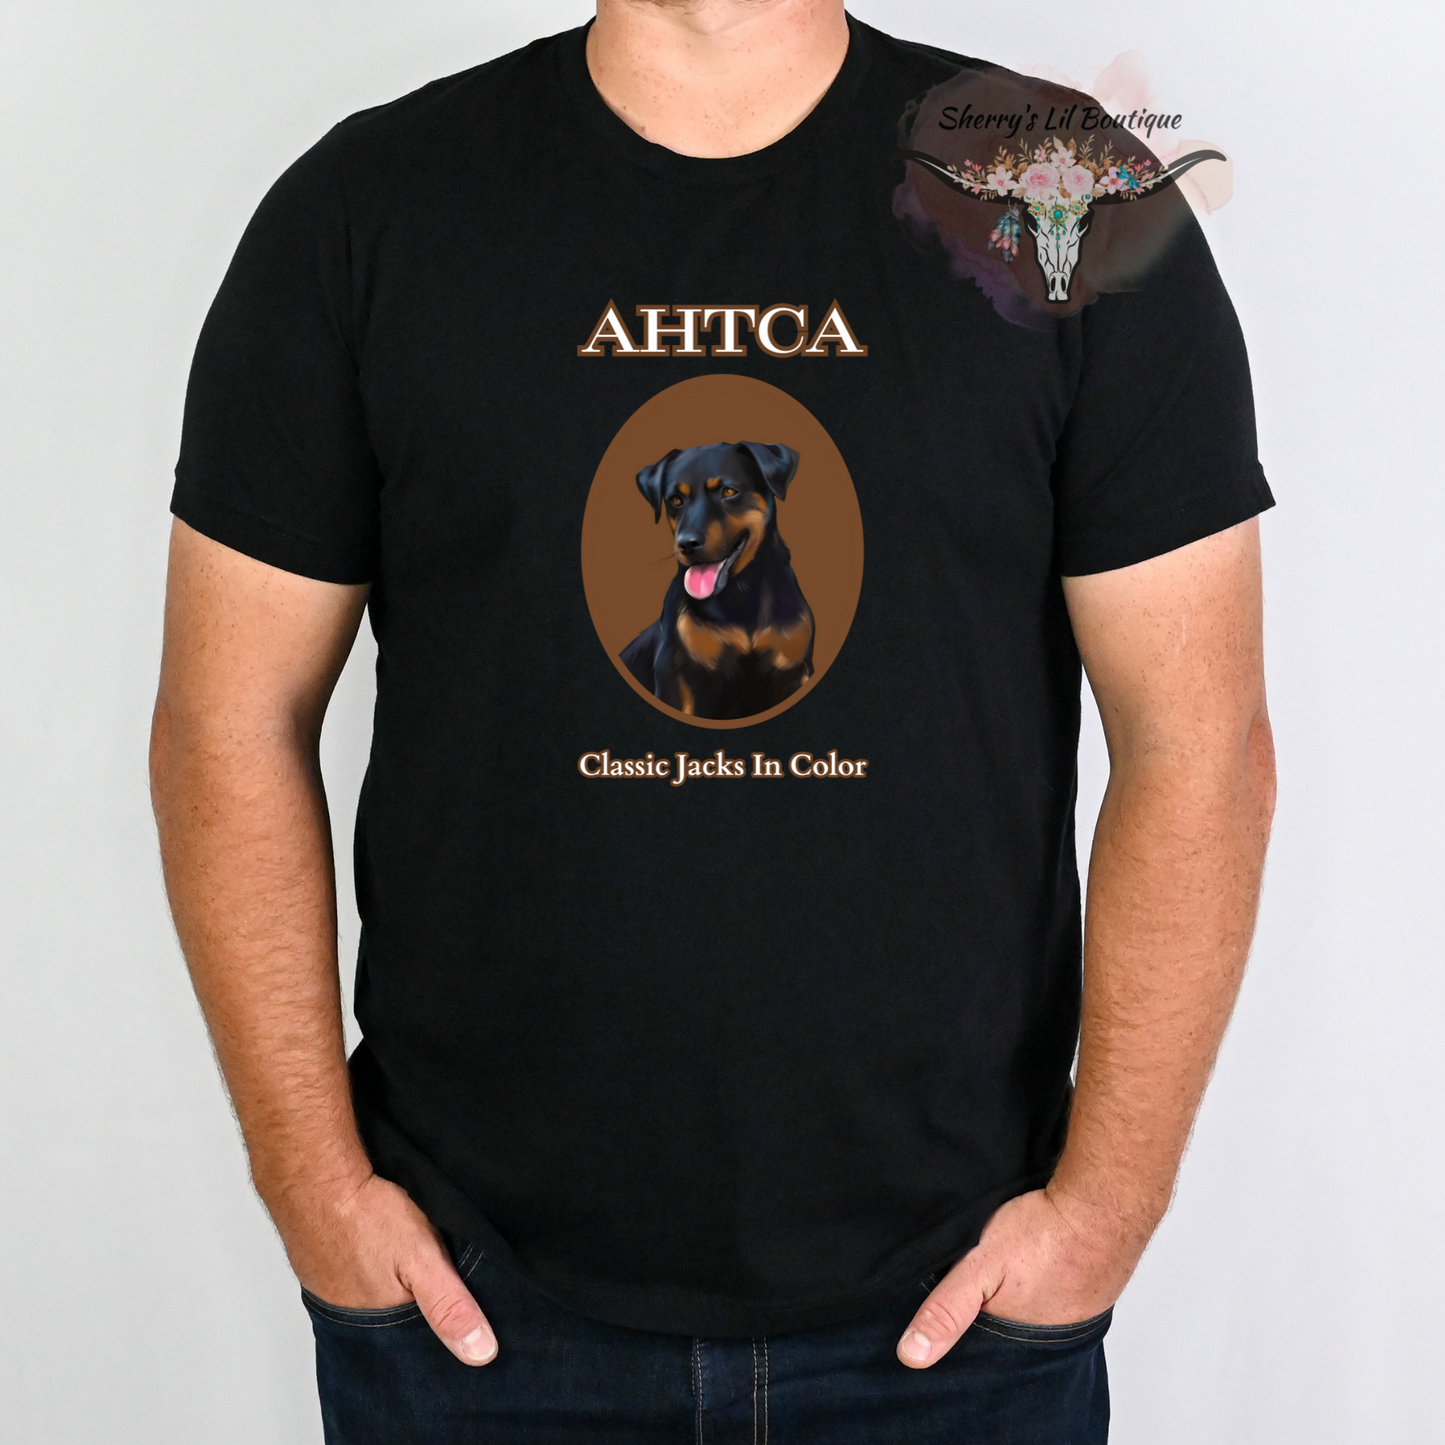 Black short sleeve tee with AHTCA graphic design